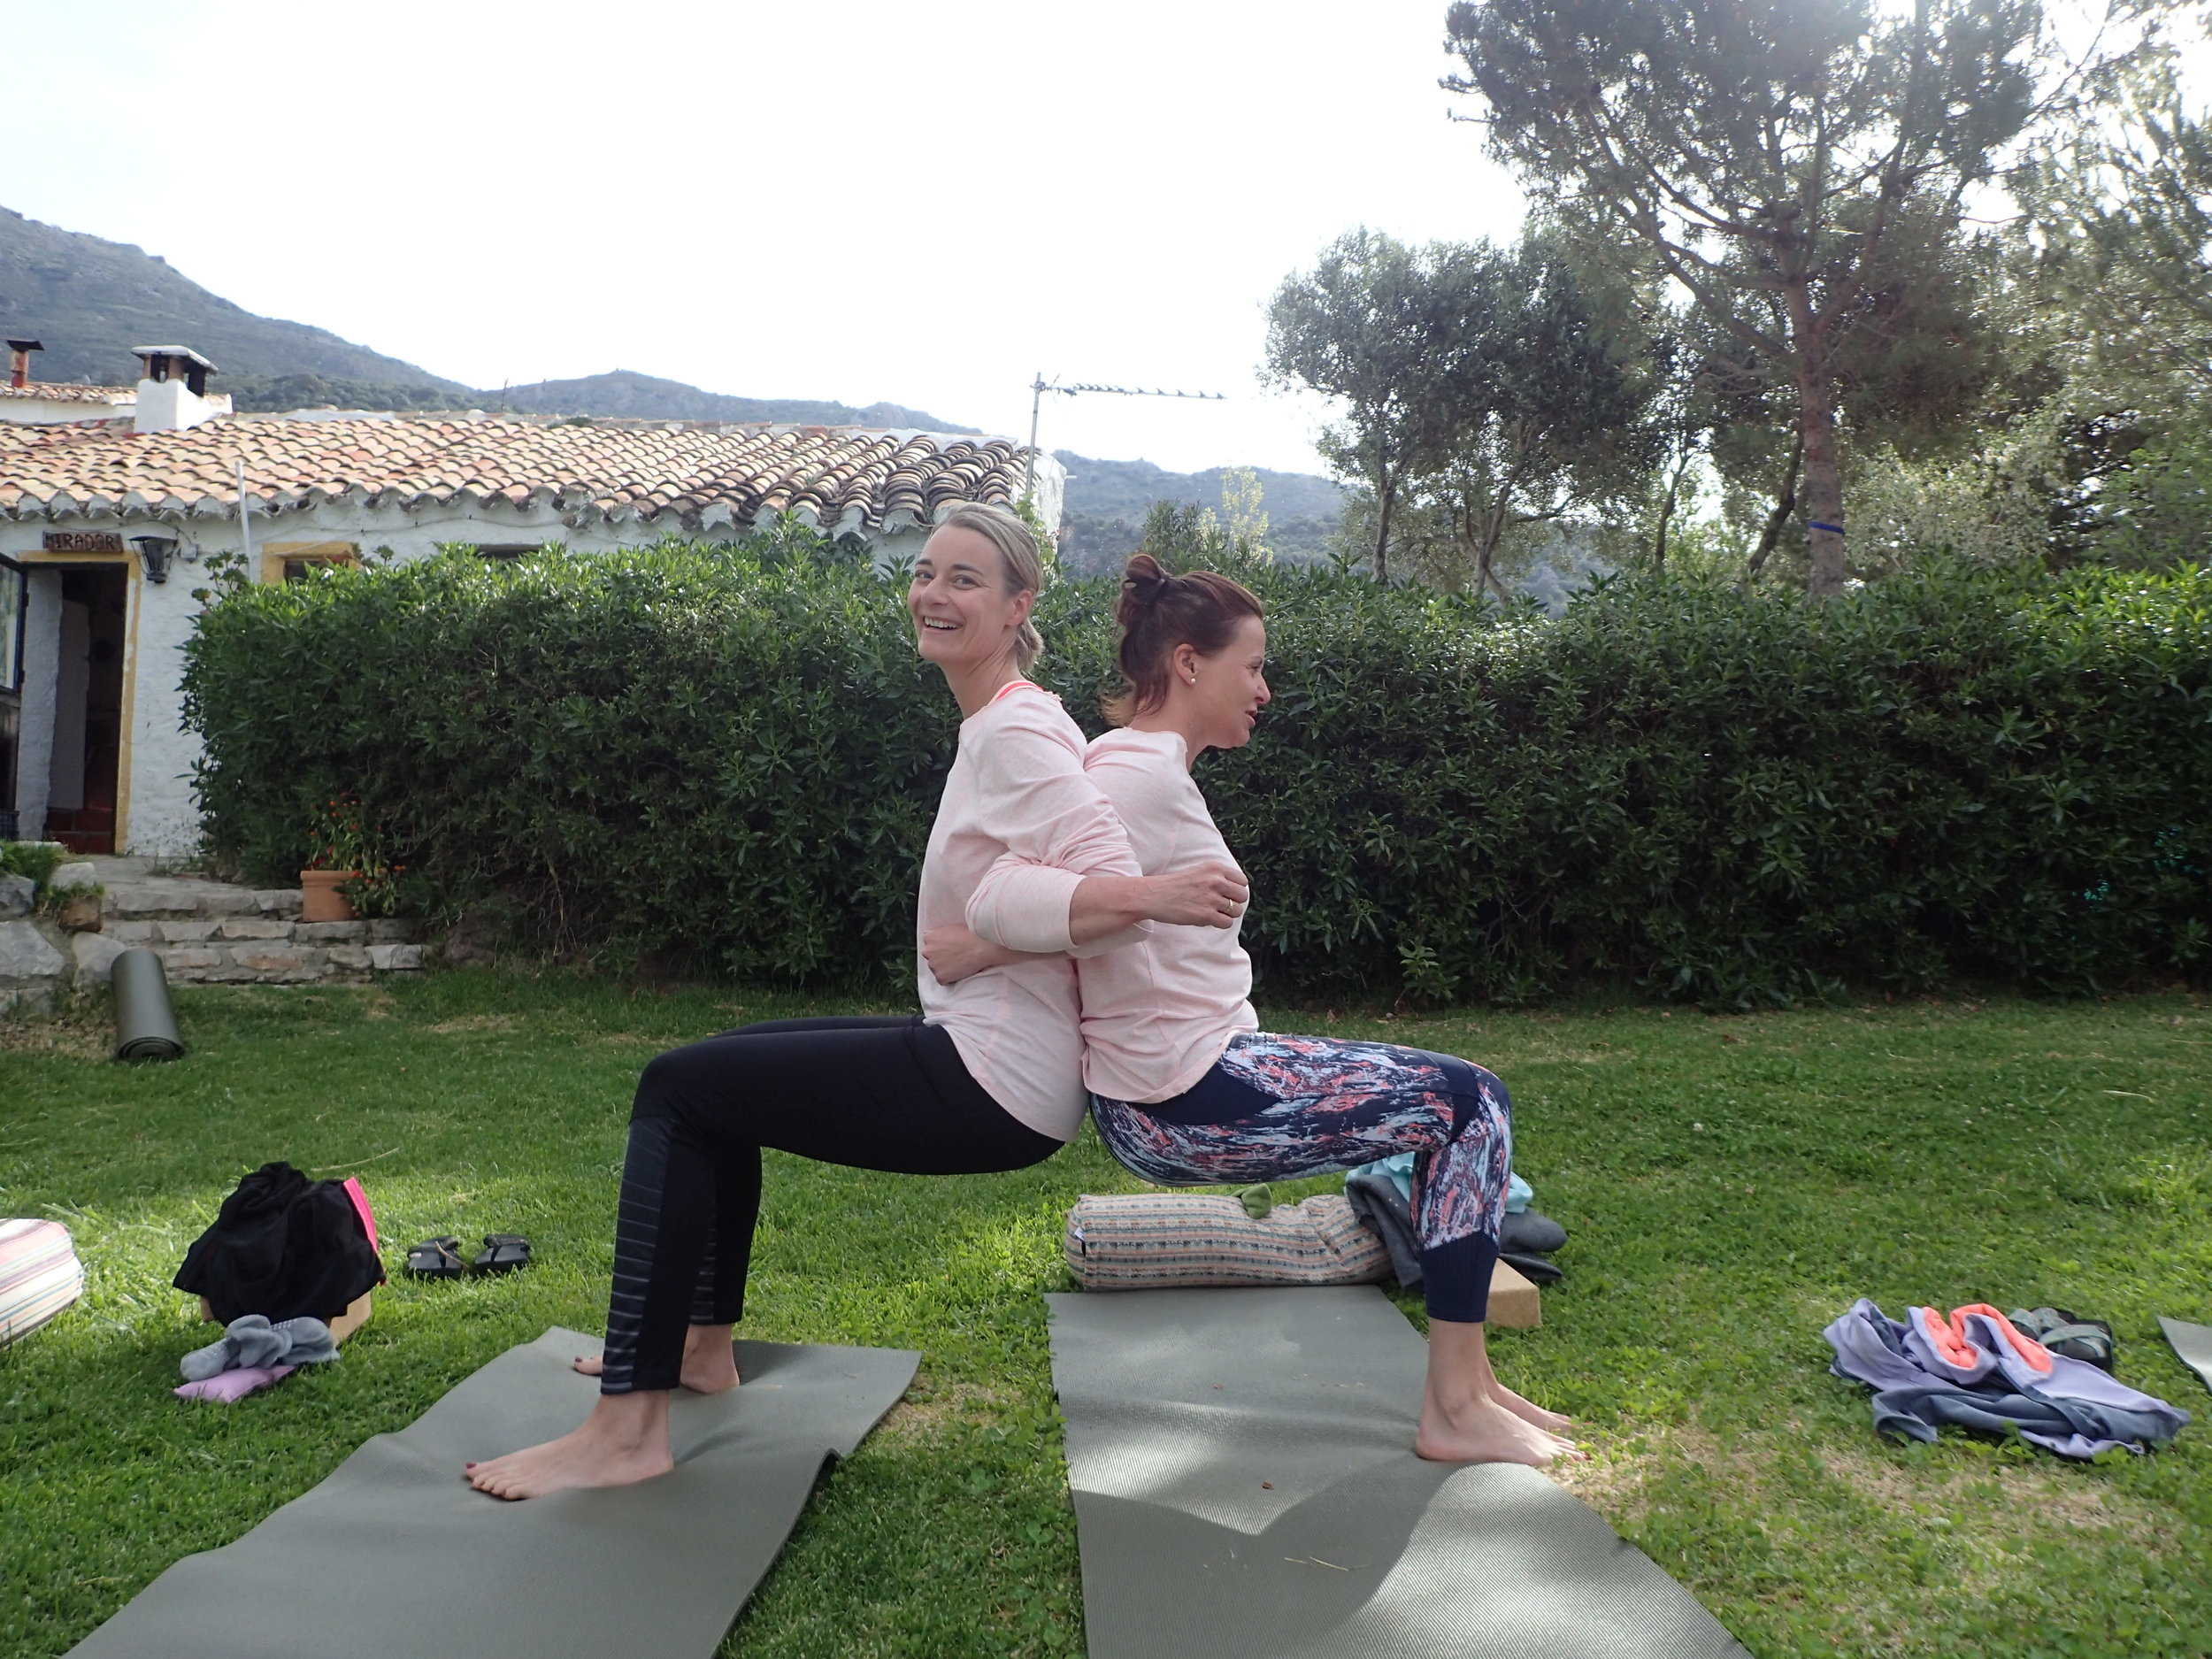 Partner yoga in garden at Yin Yang Yoga retreat in the Malaga mountains in Spain with Jane Bakx Yoga (Copy)